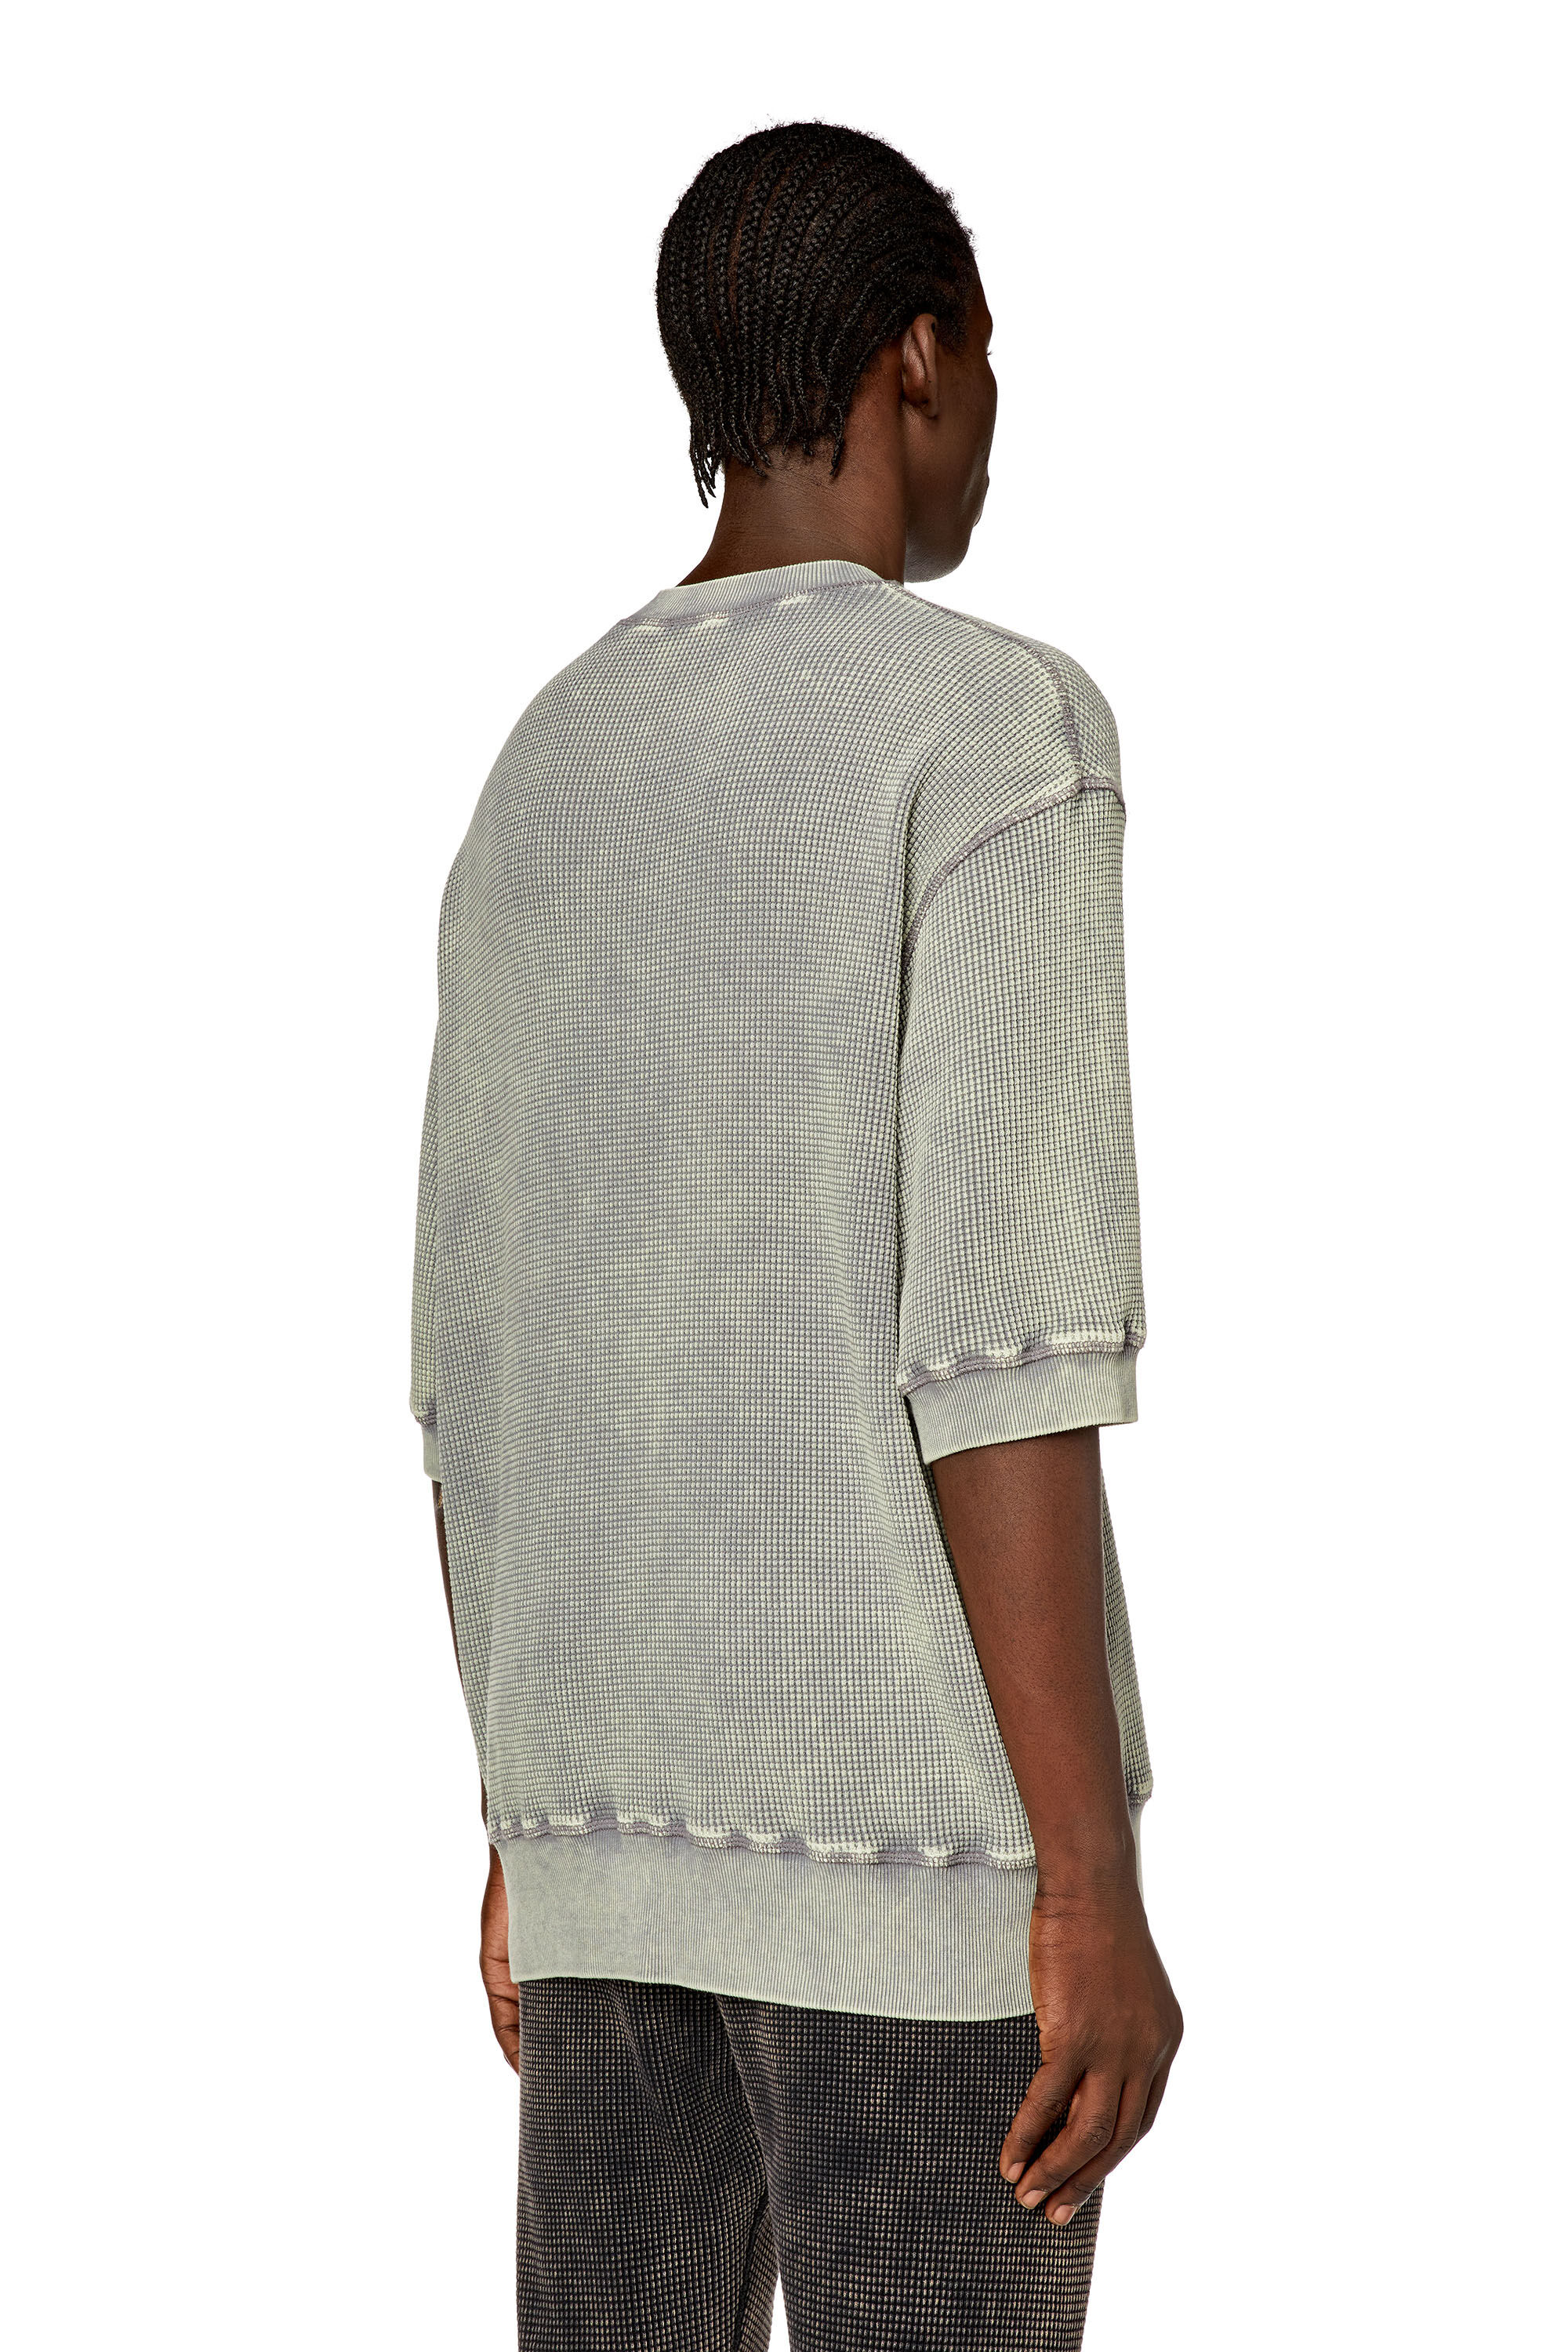 Diesel - S-COOLWAFY-N1, Homme Sweat-shirt à manches mi-longues en jersey macro-gaufré in Gris - Image 4